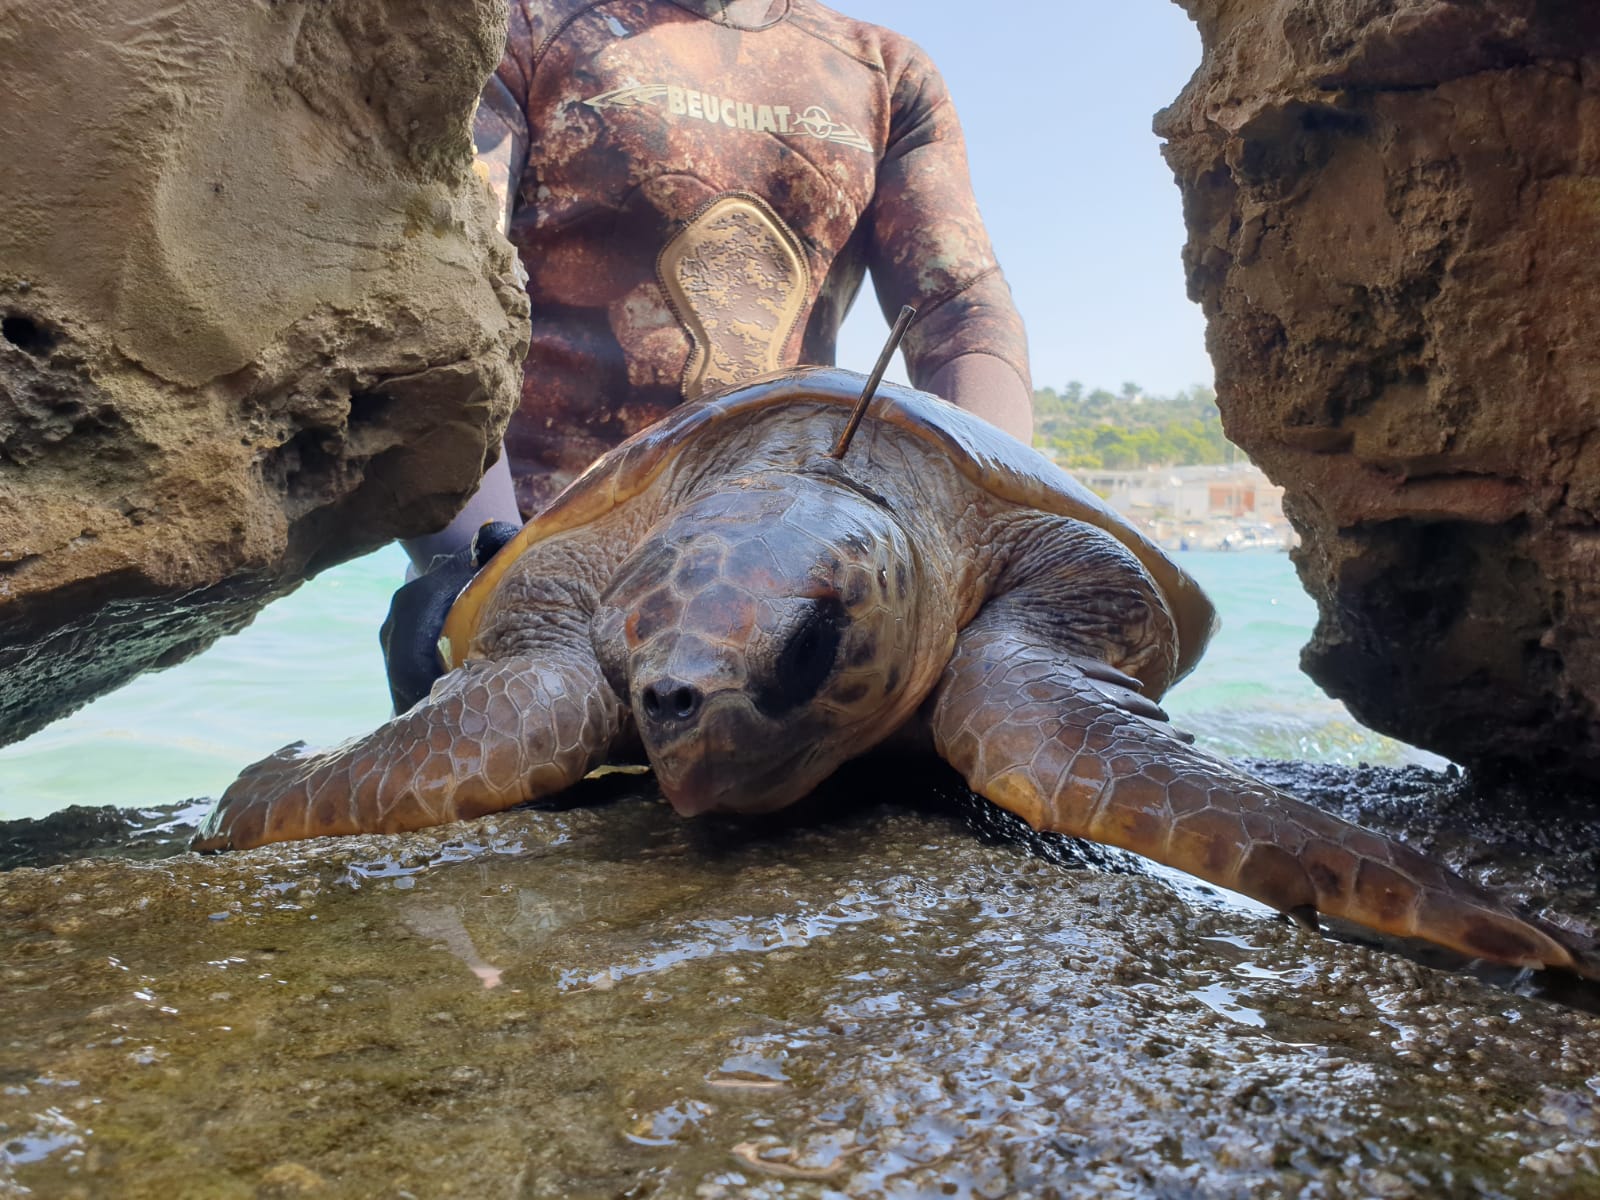 Centro studi cetacei, recuperate 483 tartarughe marine